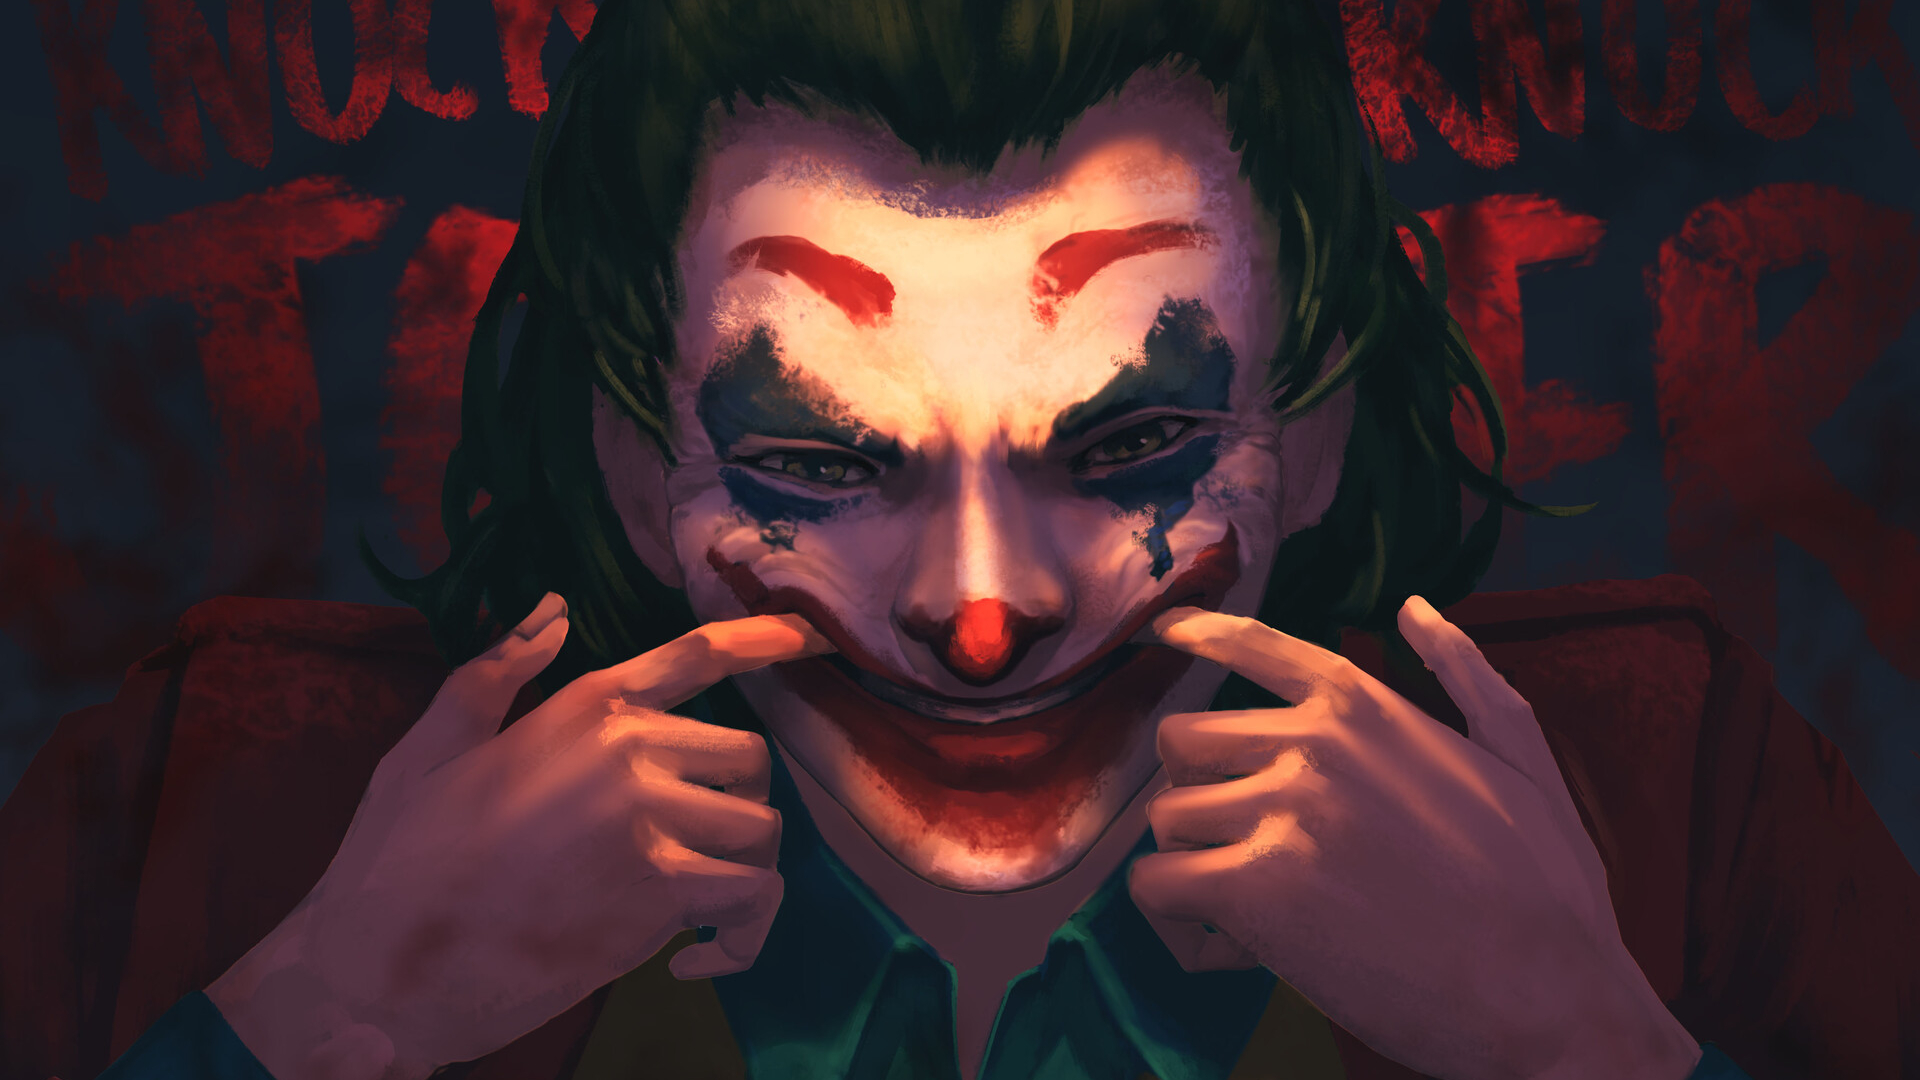 Joker Smile Wallpaper 2019 - HD Wallpaper 